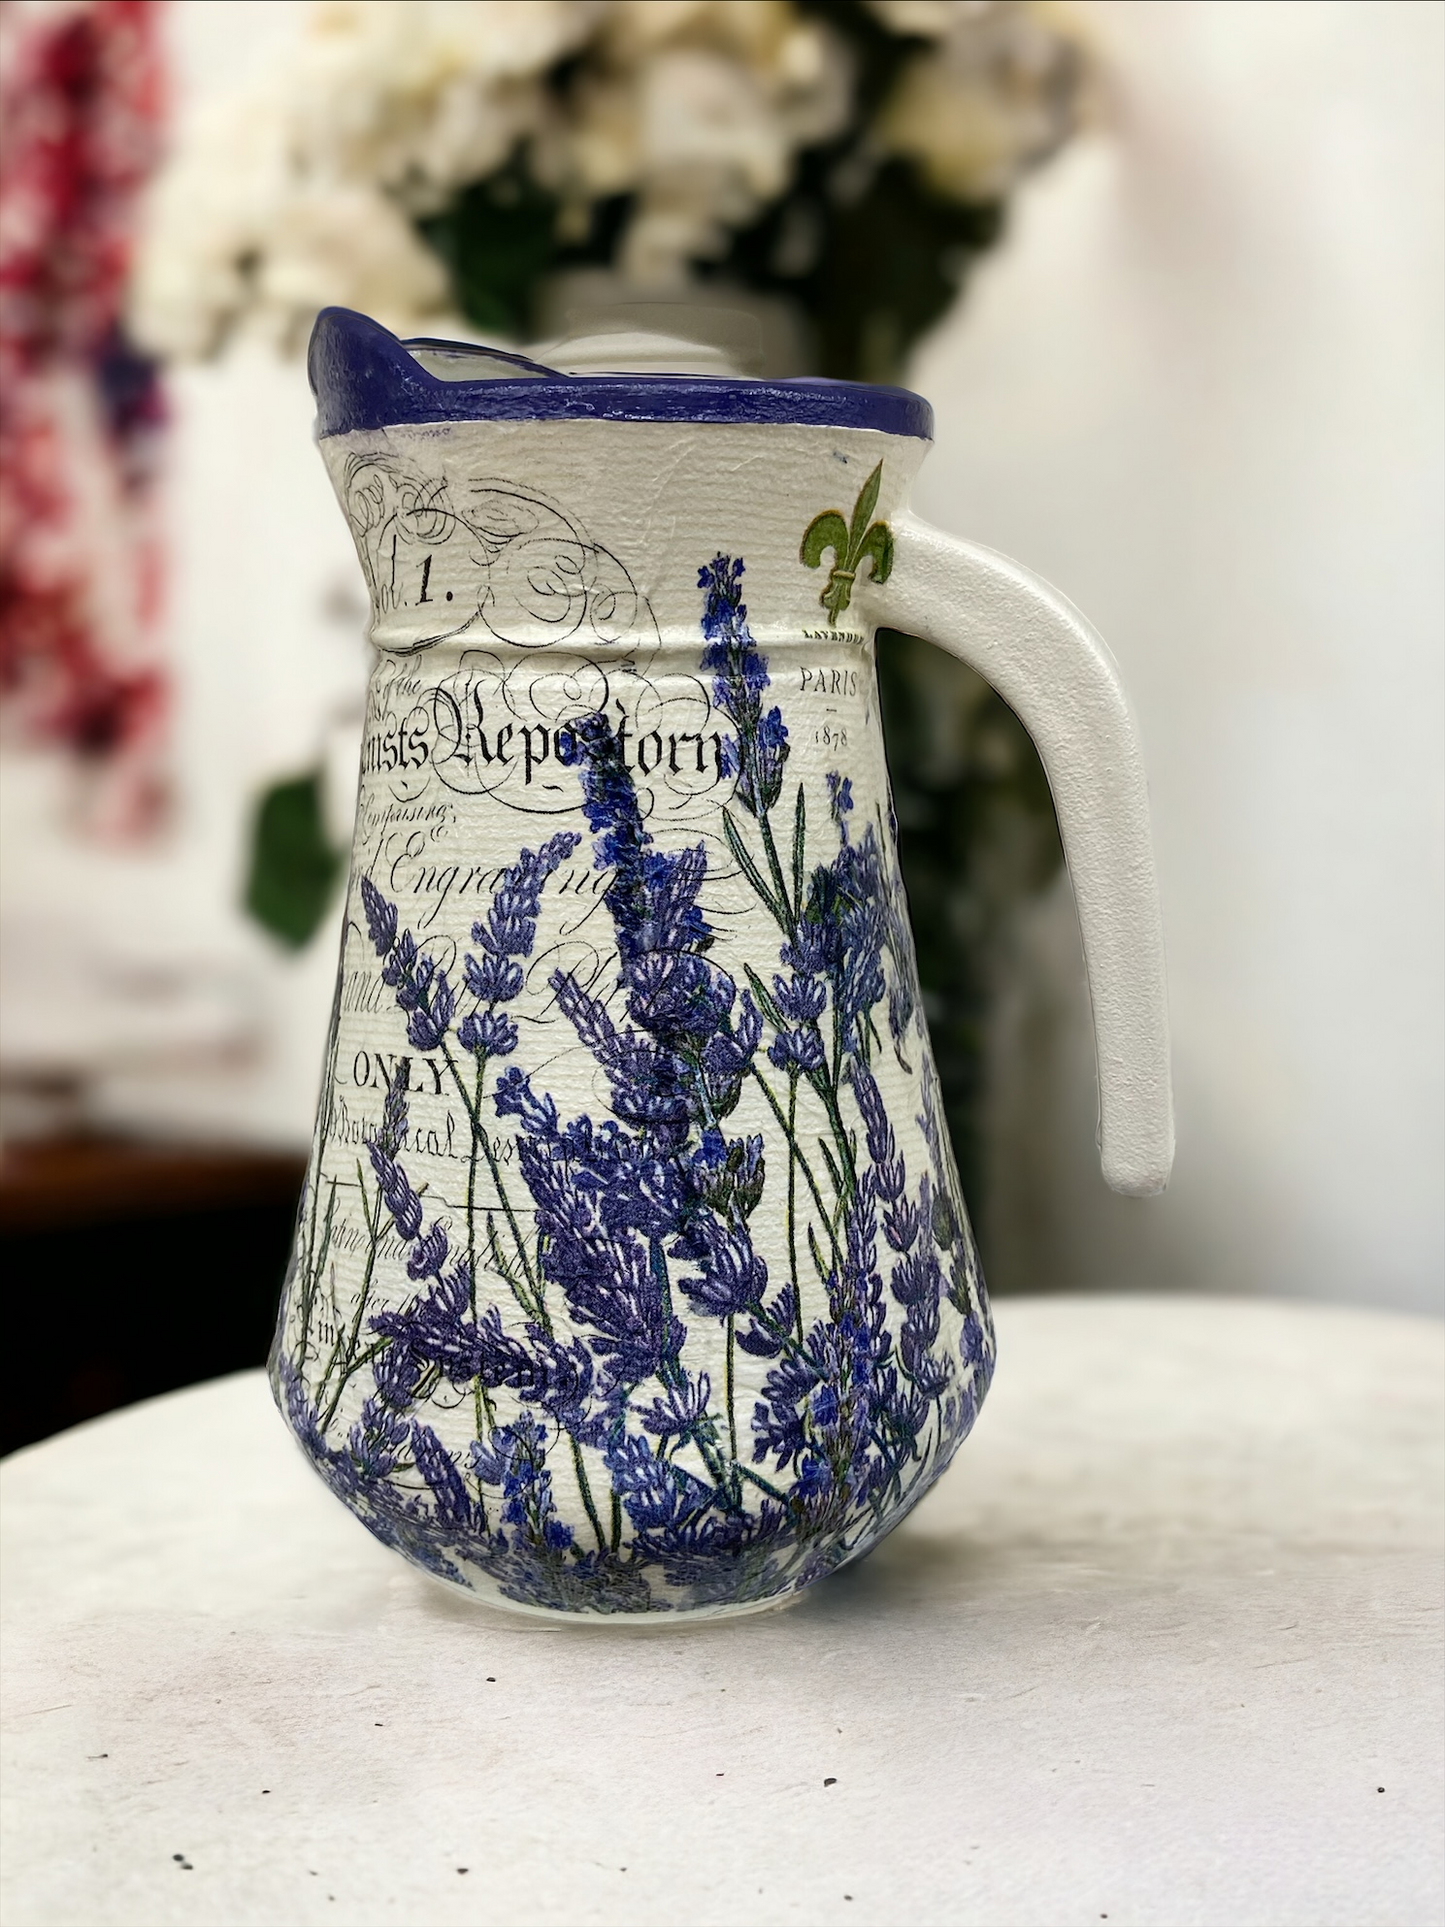 Decoupage Napkins 4" x 6.5" (2pcs)- Lavender Rosemary